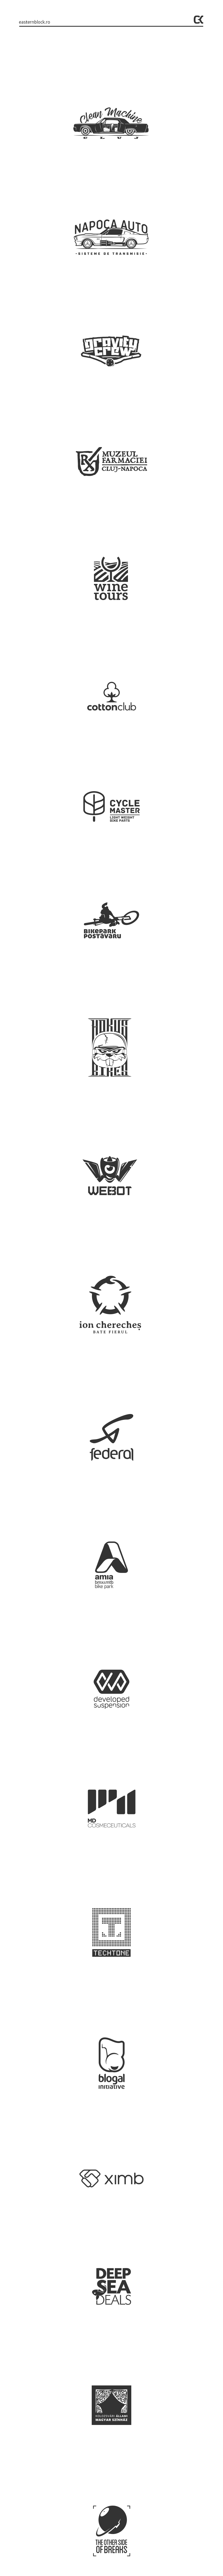 logo logofolio logos easternblock easternblock.ro rolli chereches identity Logo Design